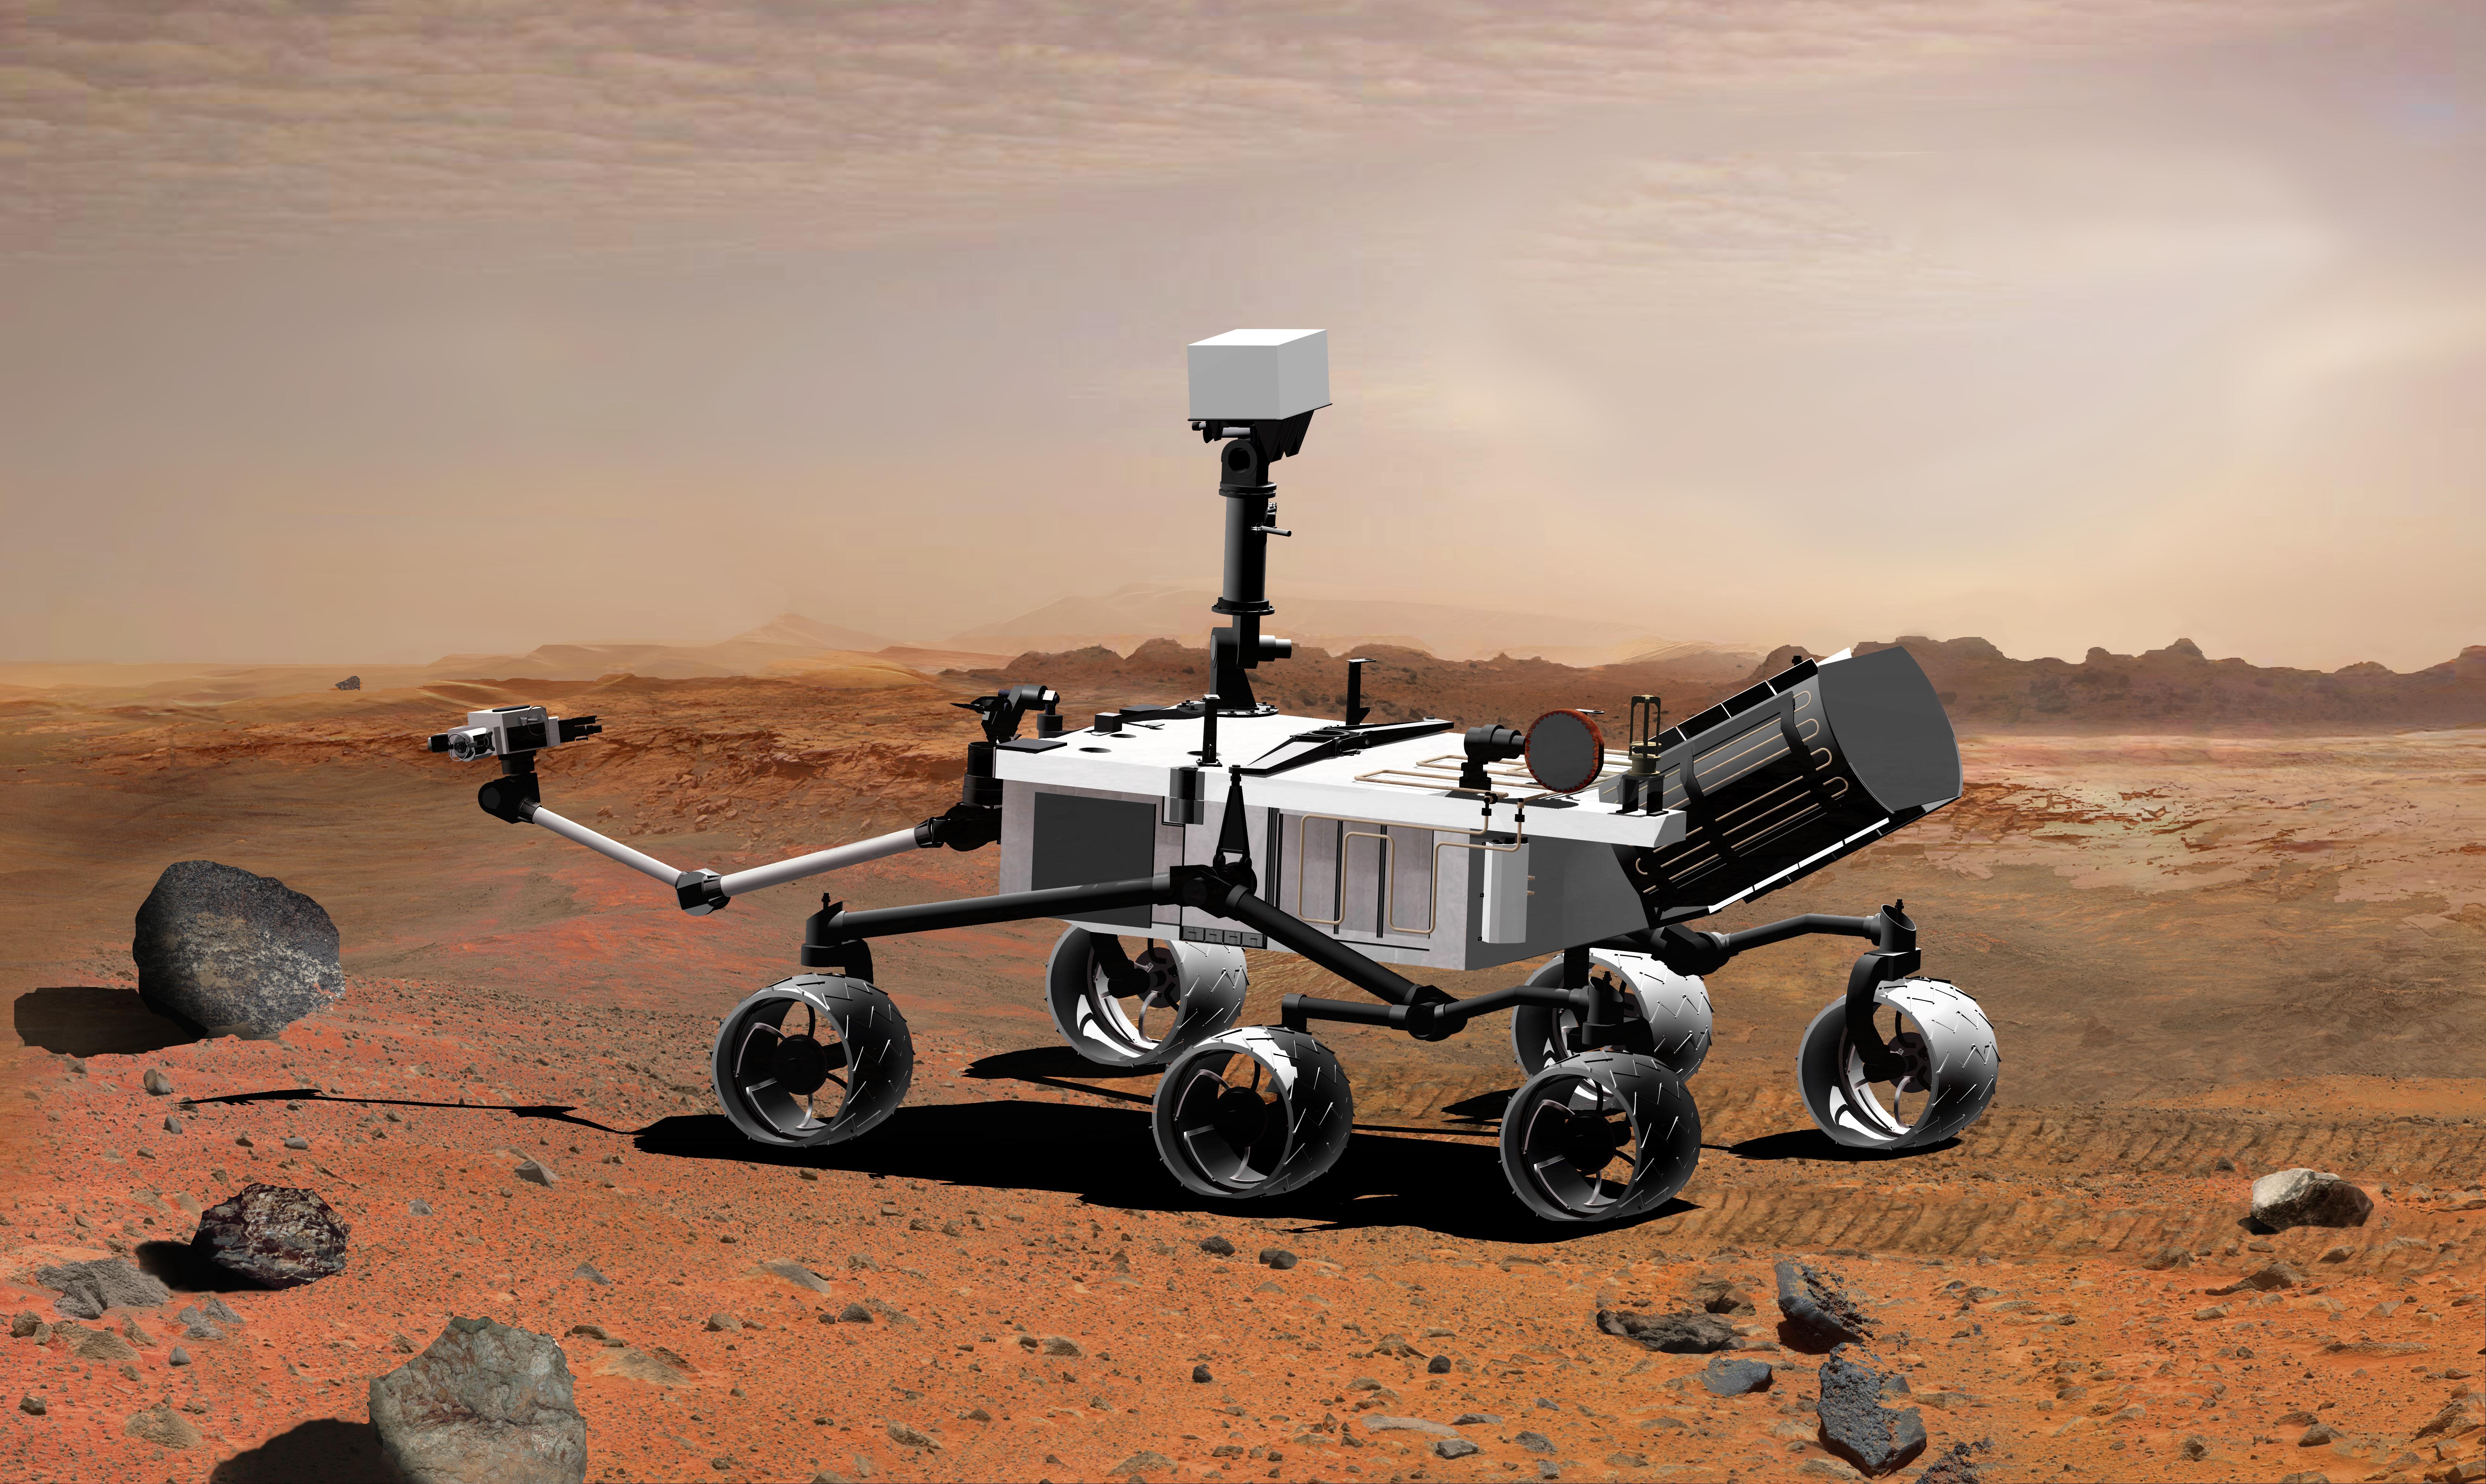 Beurs Houden Derde 3-D camera won't be ready for Mars rover flight